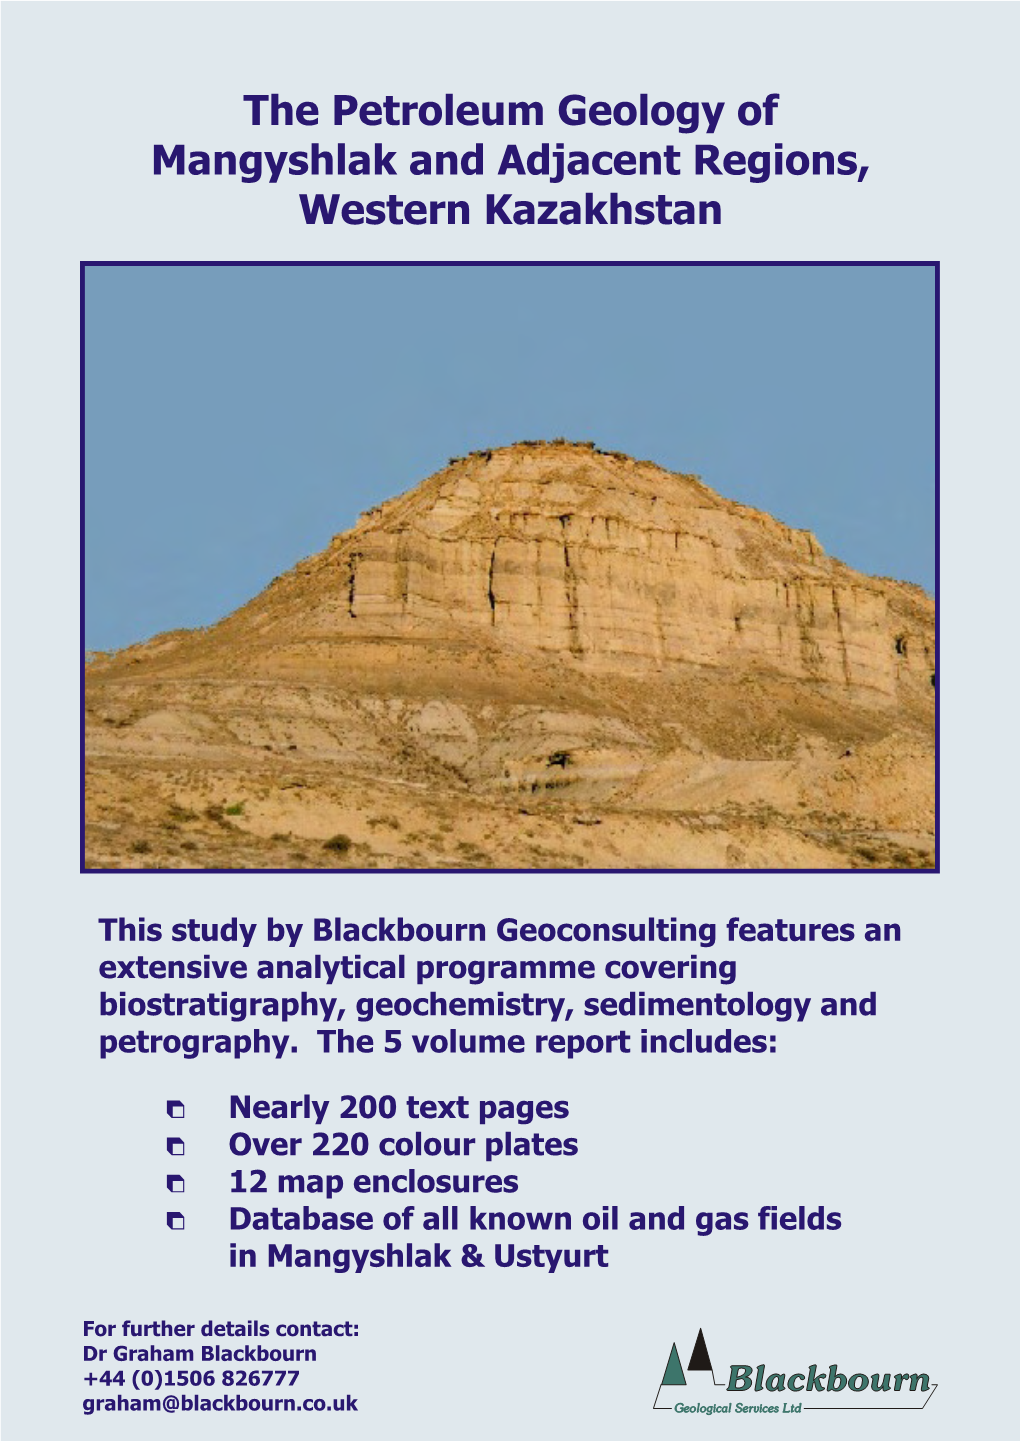 The Petroleum Geology of Mangyshlak and Adjacent Regions, Western Kazakhstan